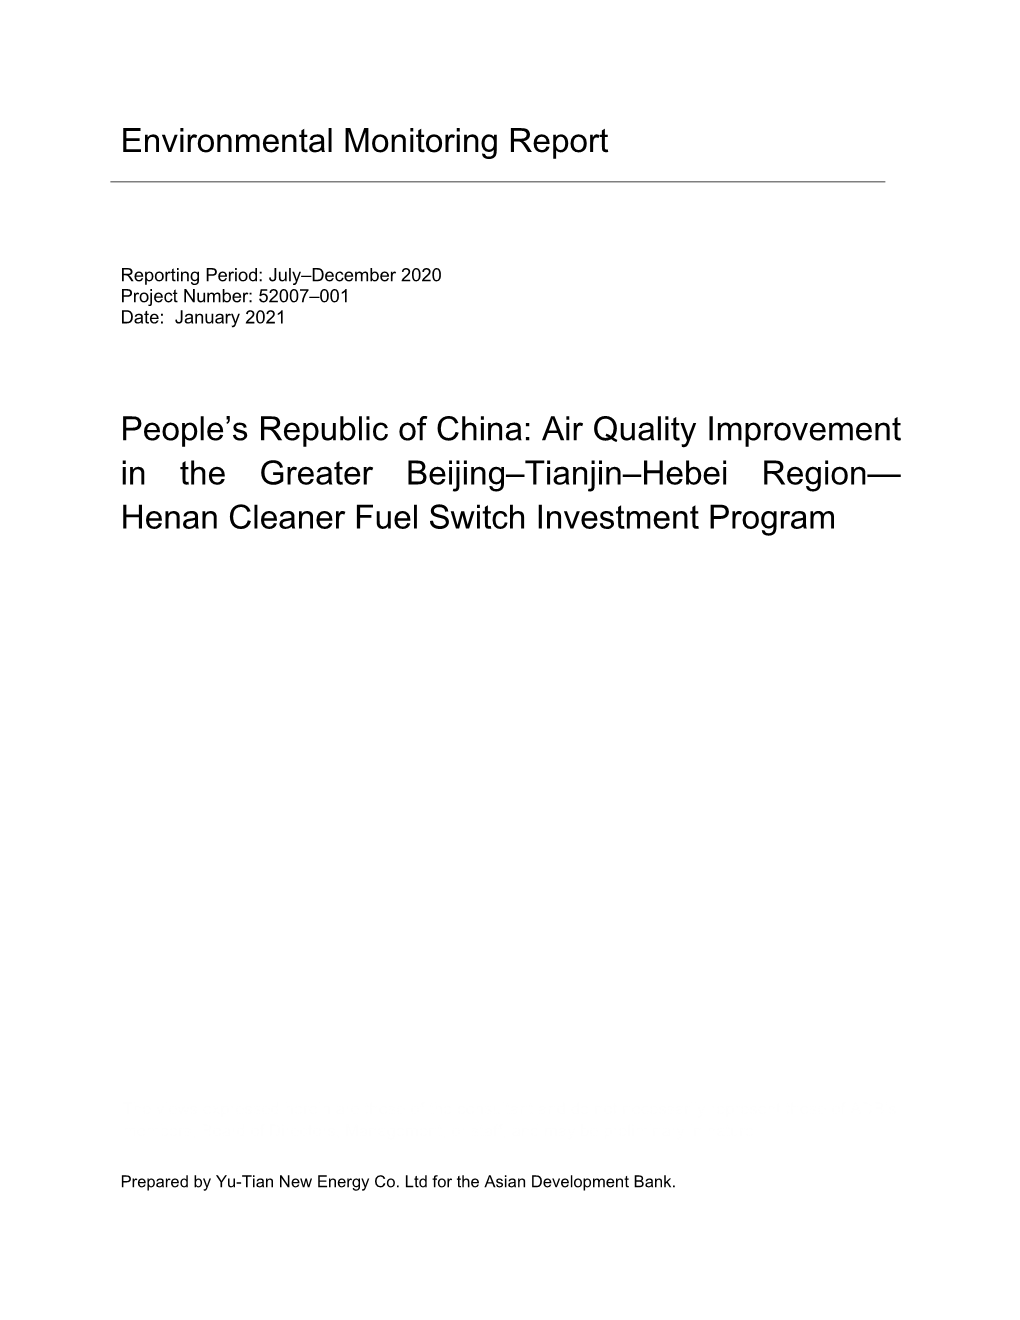 Environmental Monitoring Report People's Republic of China: Air